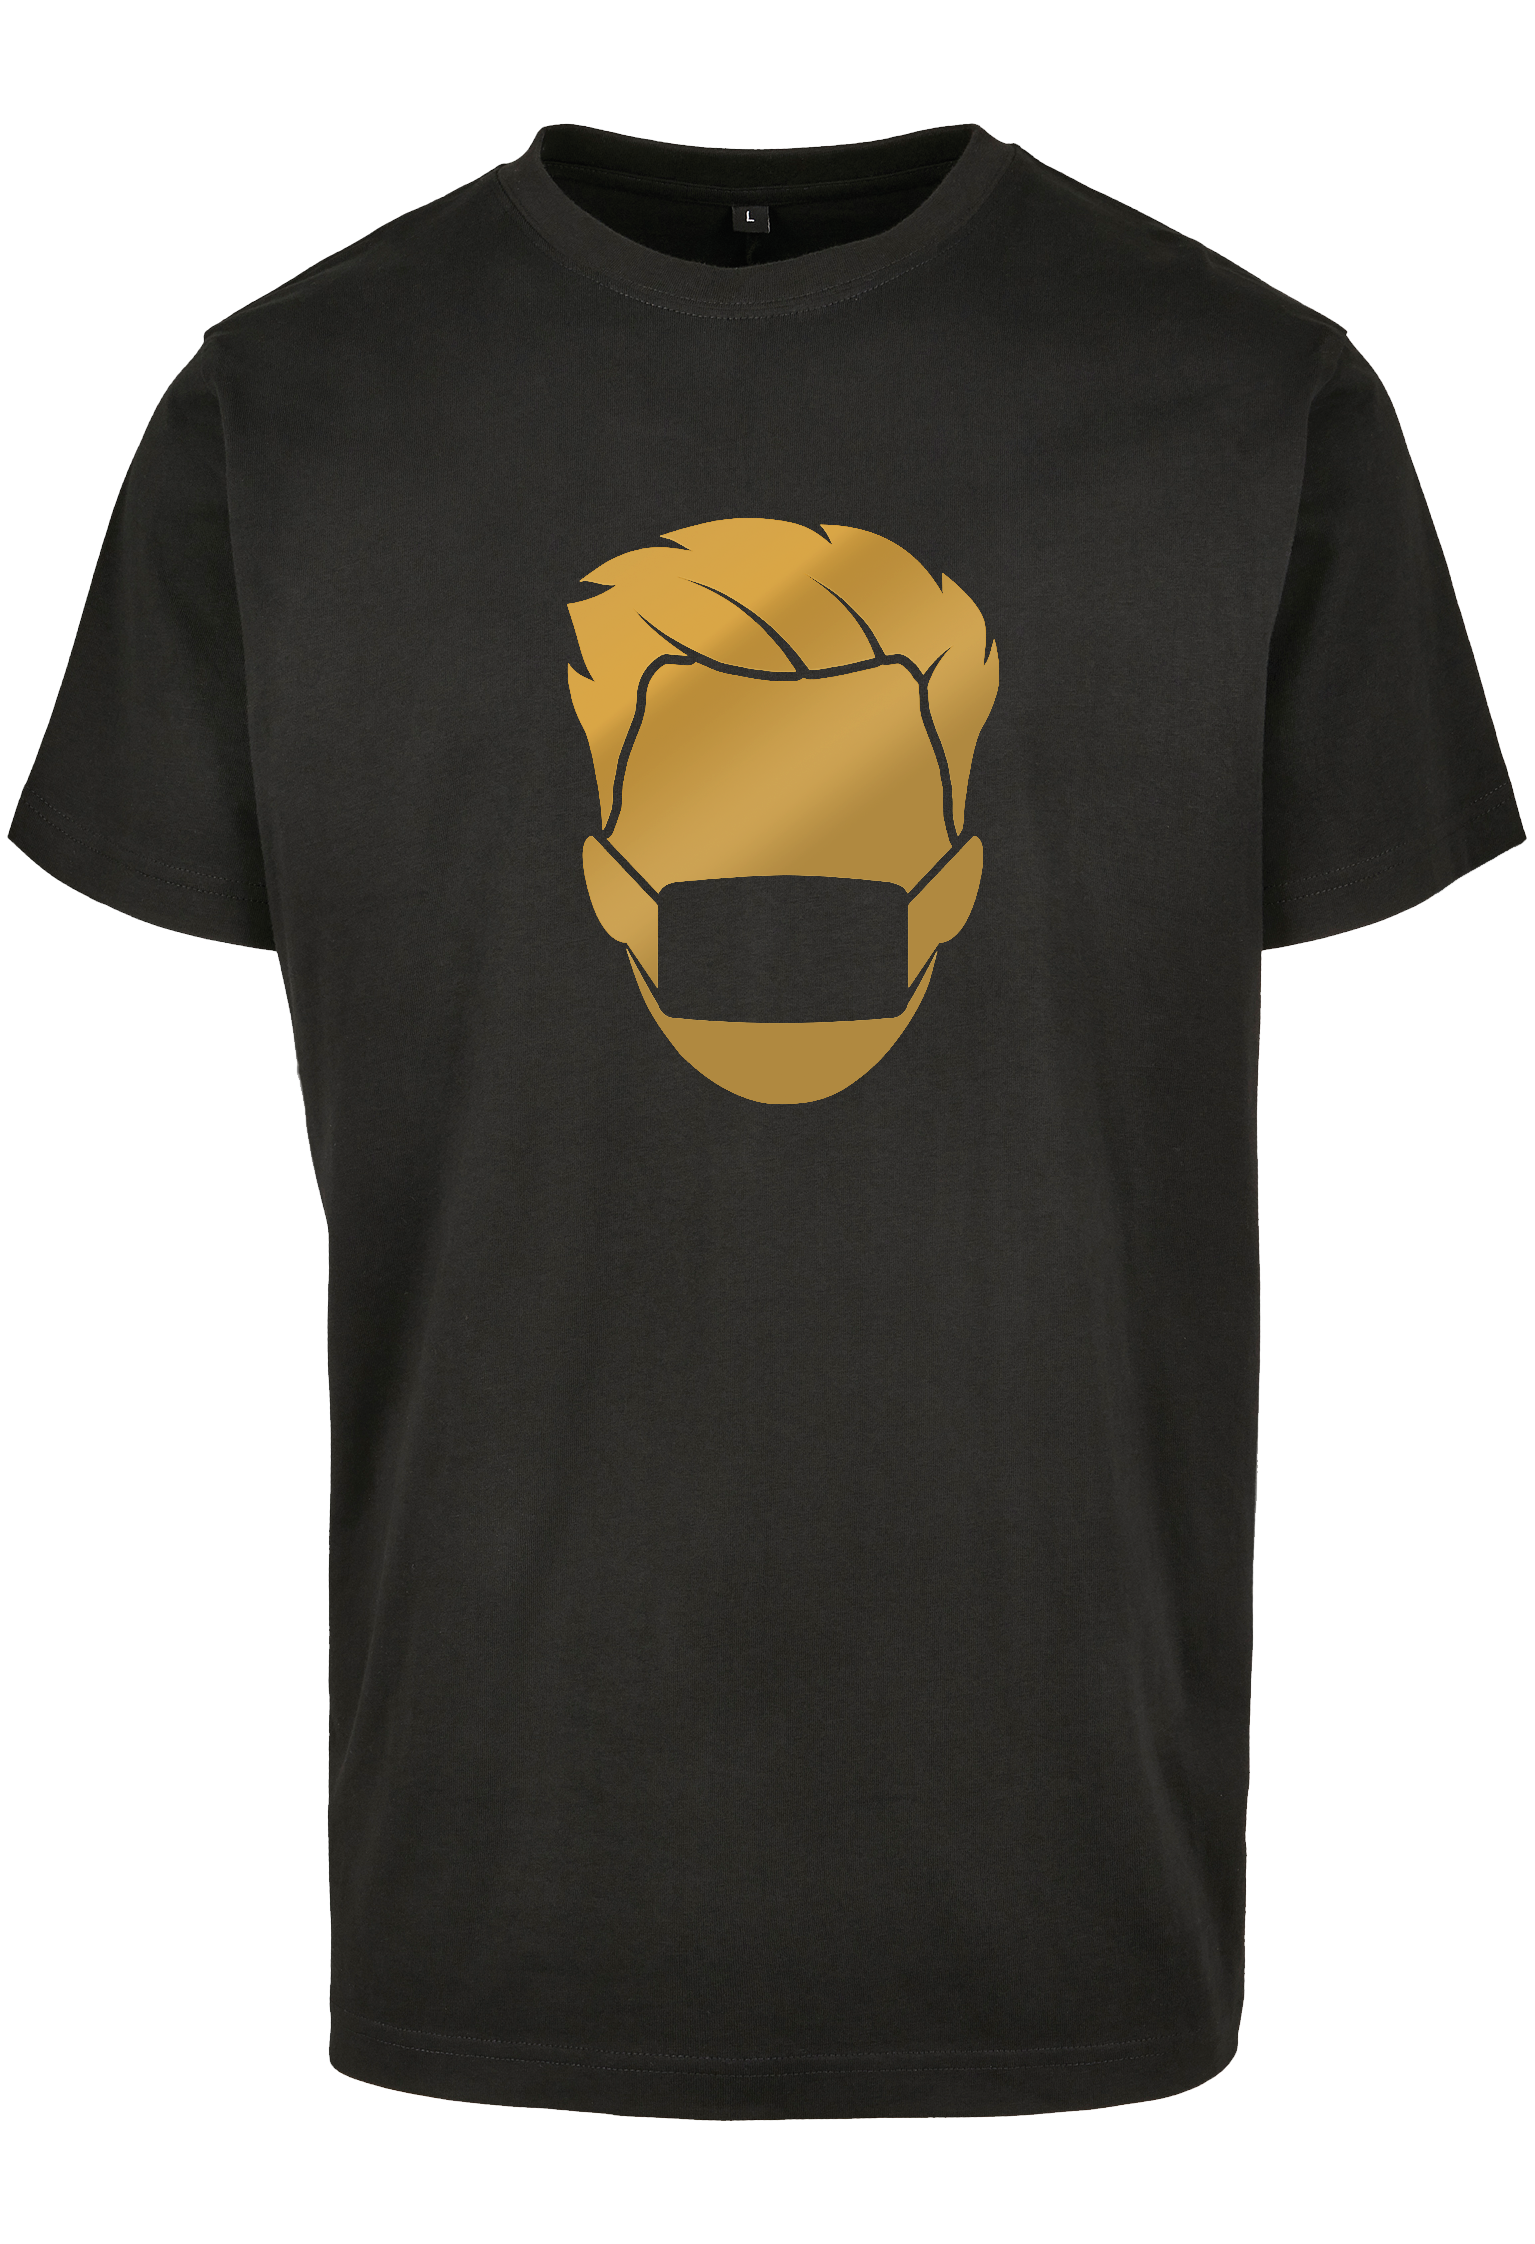 Goldtron black T-Shirt